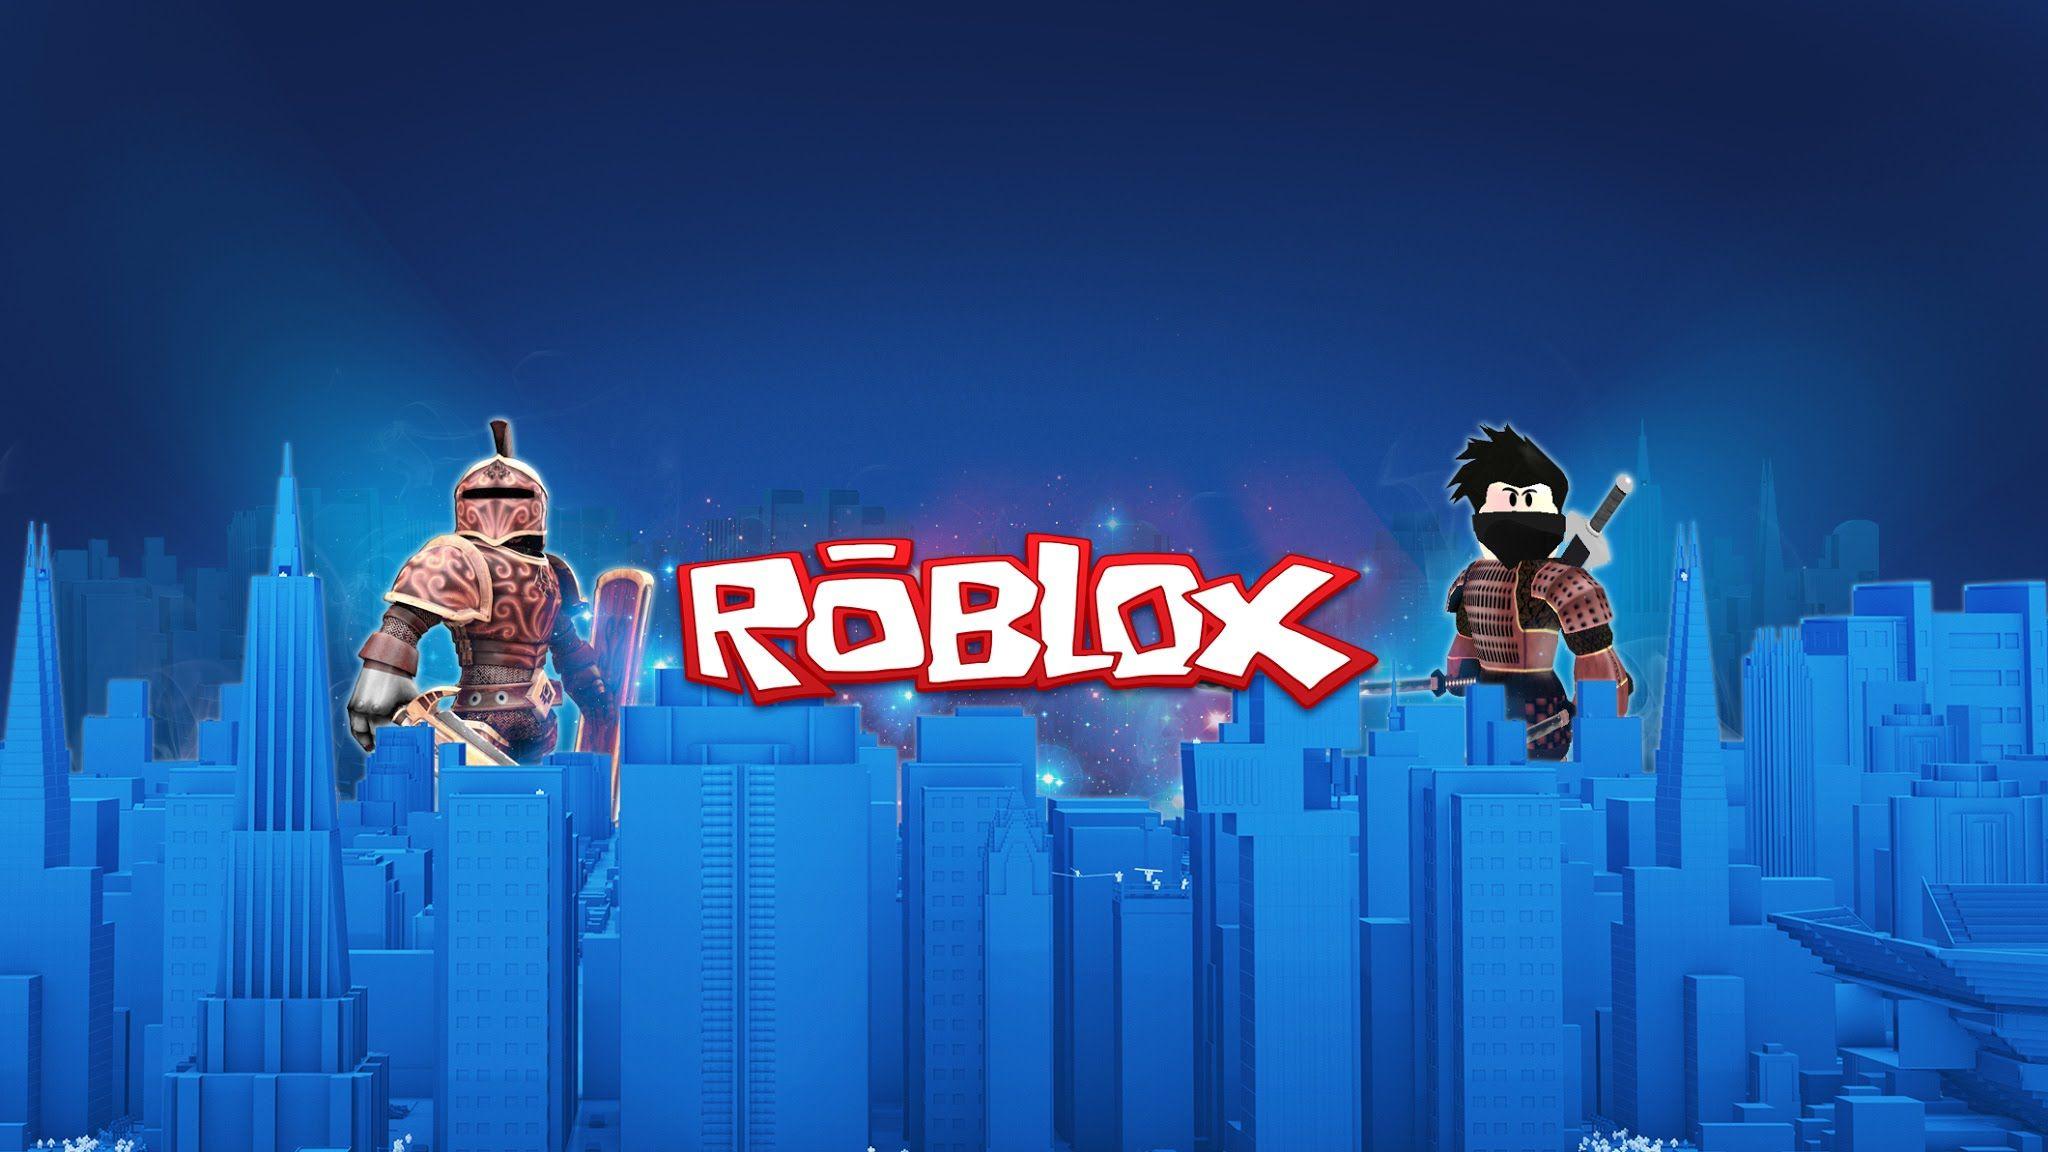 Roblox Robot Wallpapers Wallpaper Cave - roblox robot wallpaper bebe super heroi roblox imagem quadro